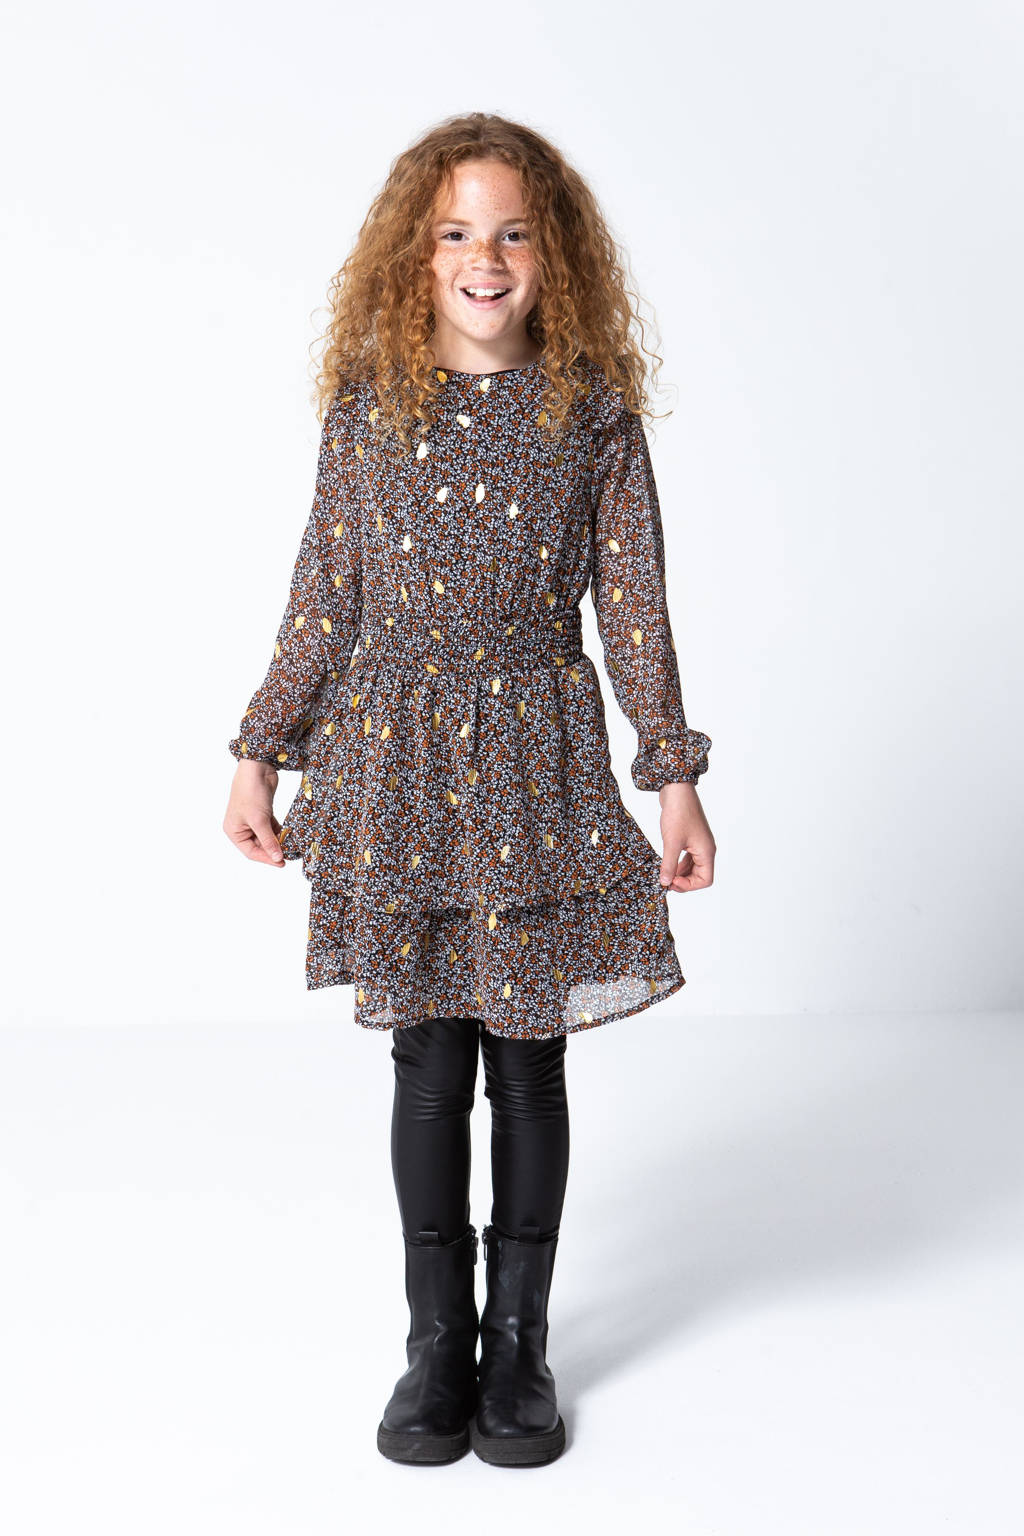 KIDS ONLY GIRL semi-transparante jurk met all over print en ruches bruin/zwart/goud | wehkamp